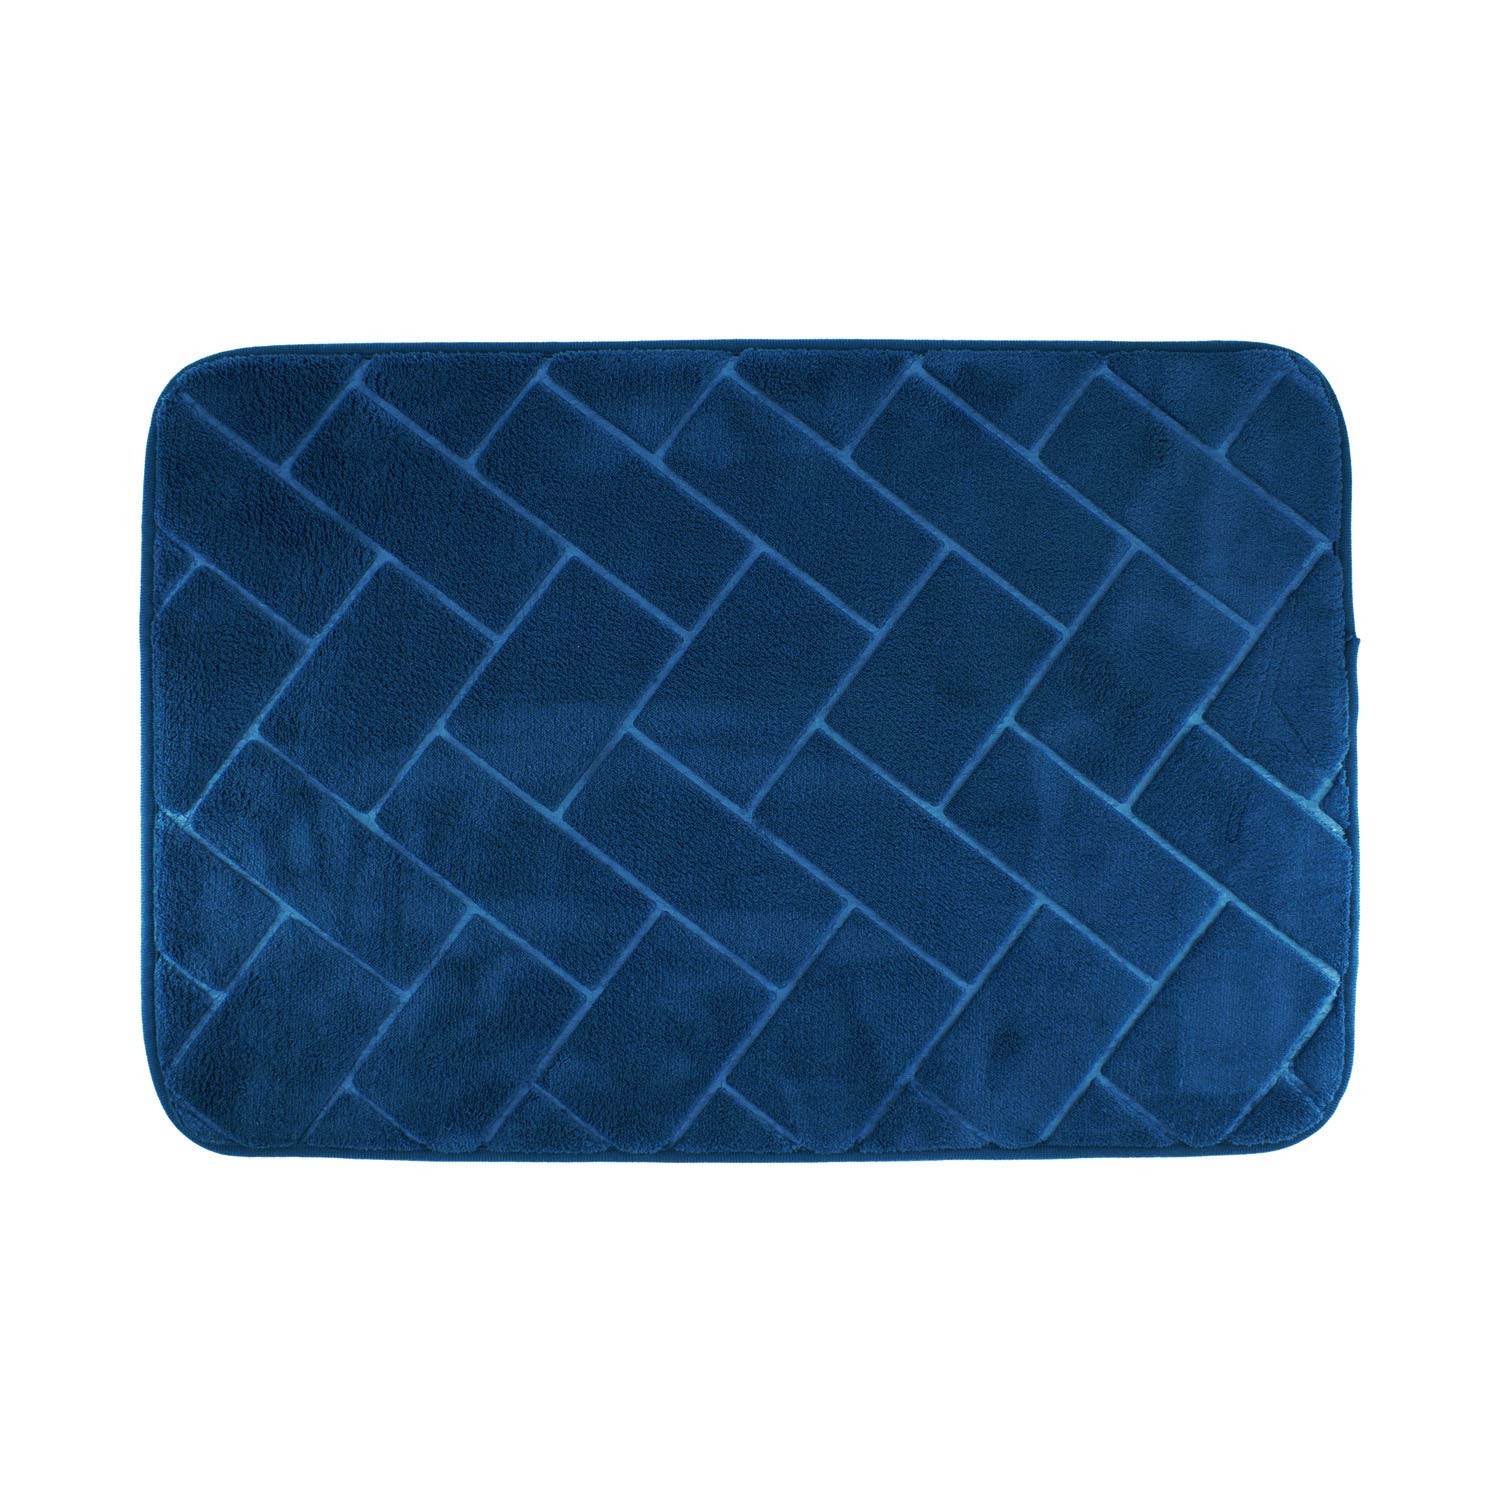 Hanselhome Plastic Folding Stool blue 